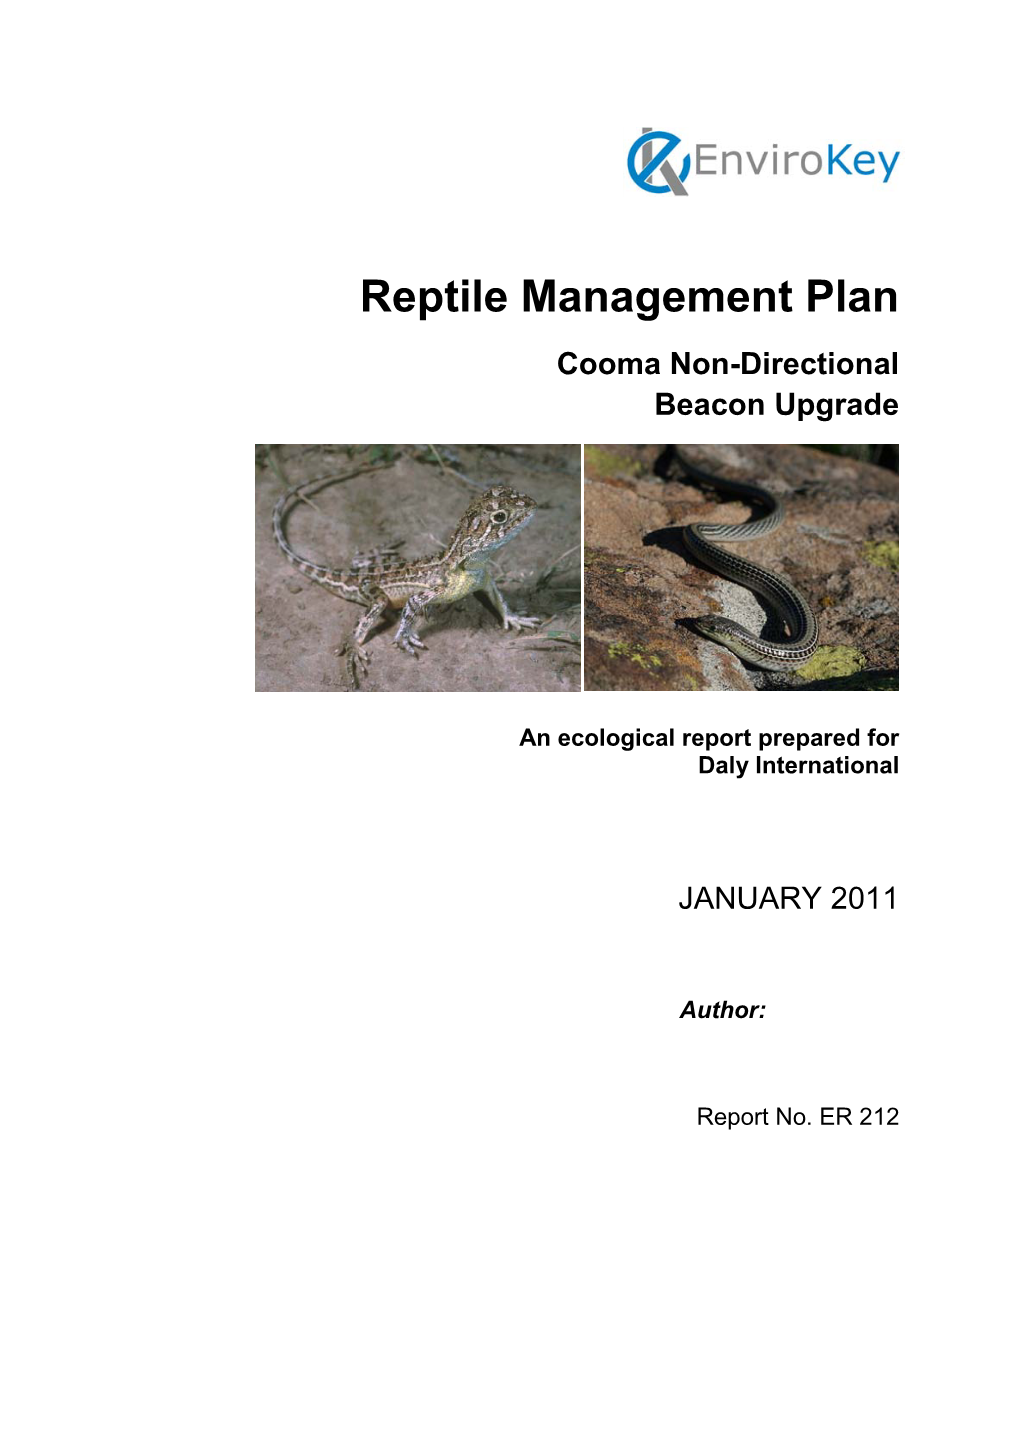 Reptile Management Plan Cooma Non-Directional Beacon Upgrade